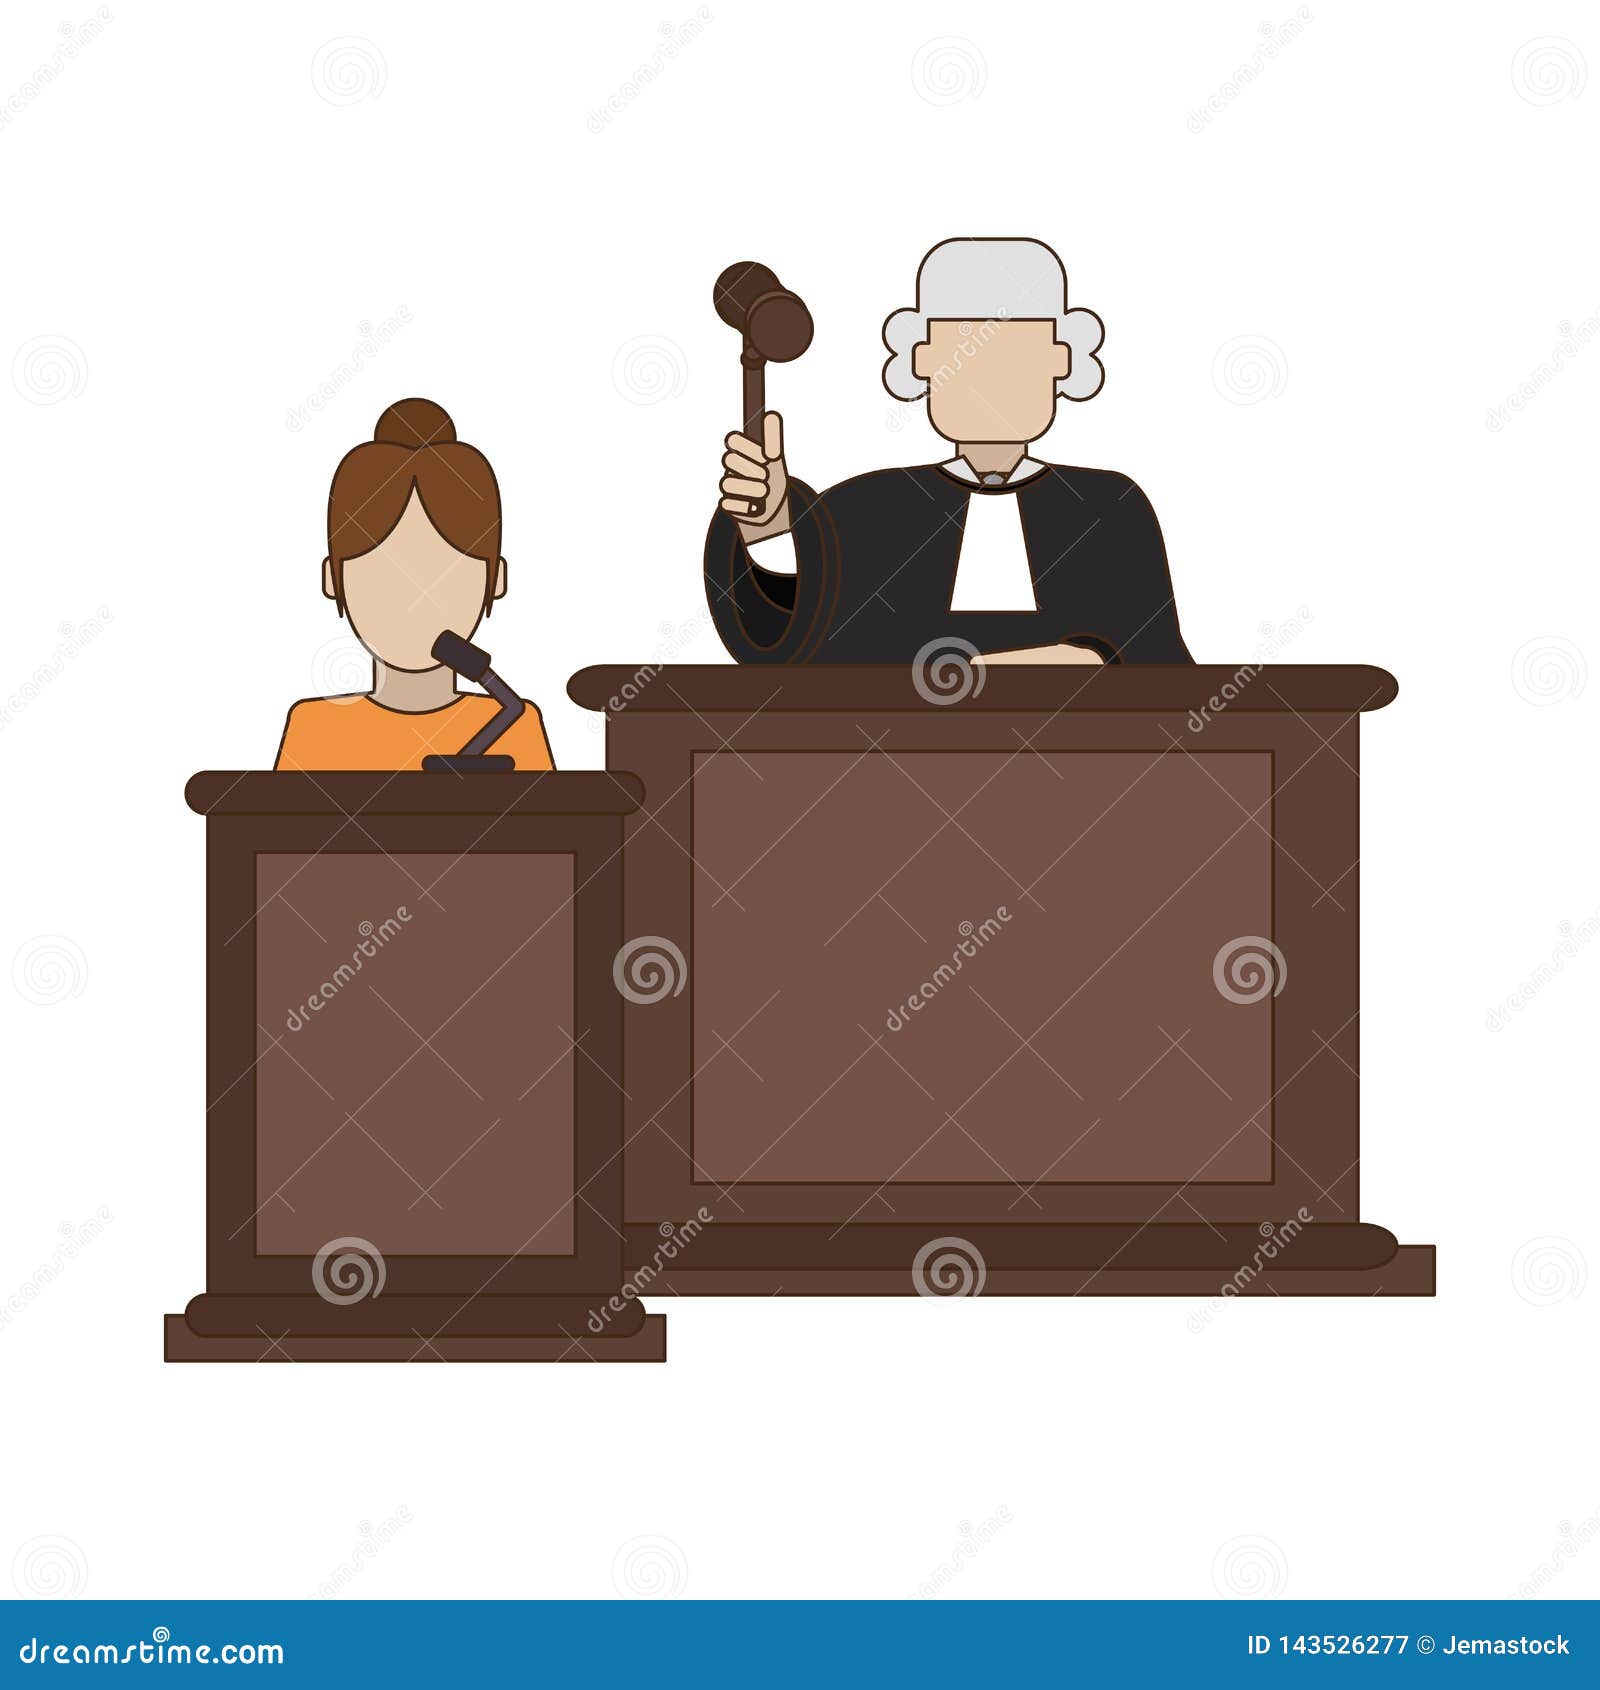 judge and witness on podium